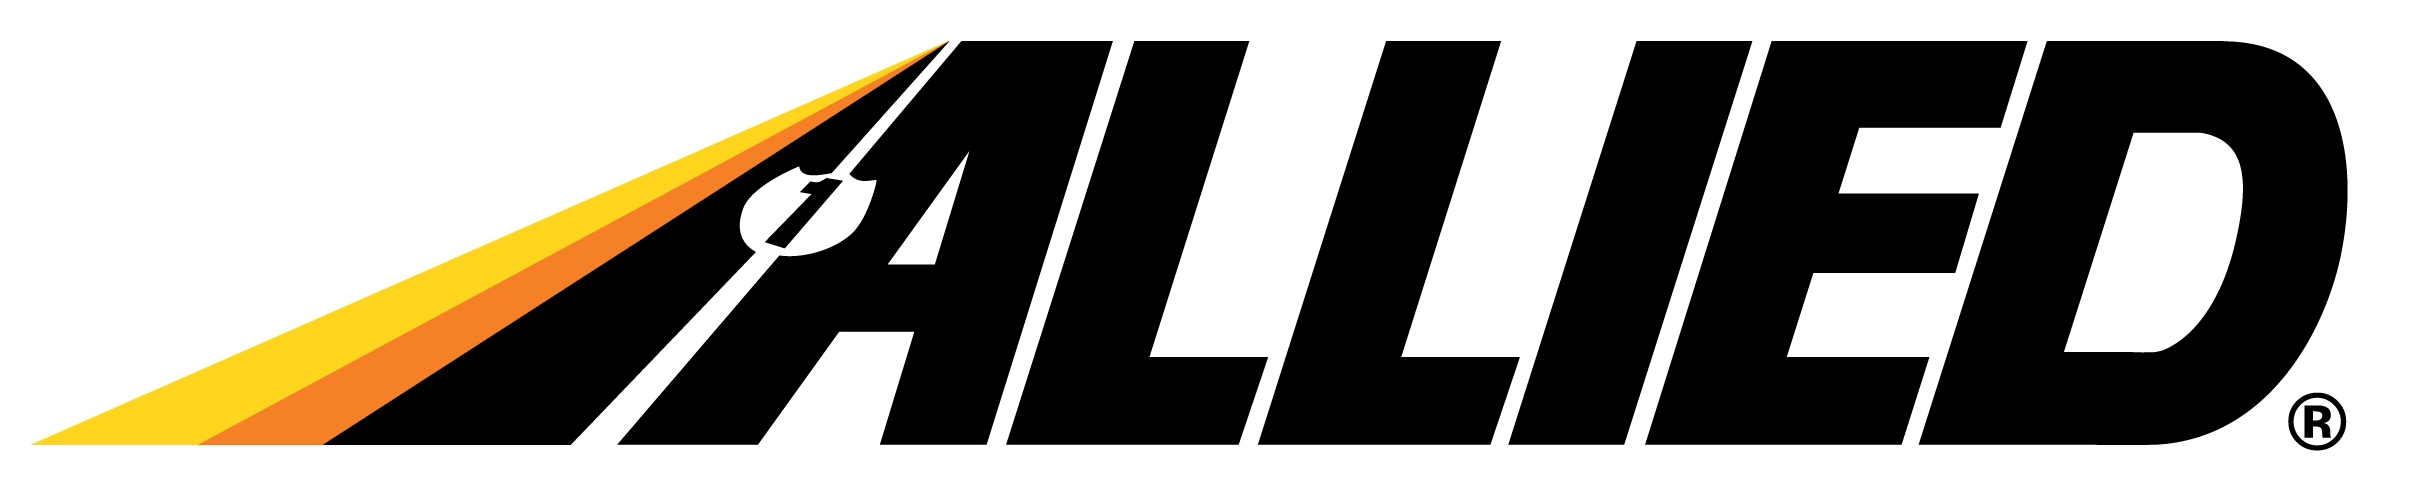 Allied Van Lines's Logo